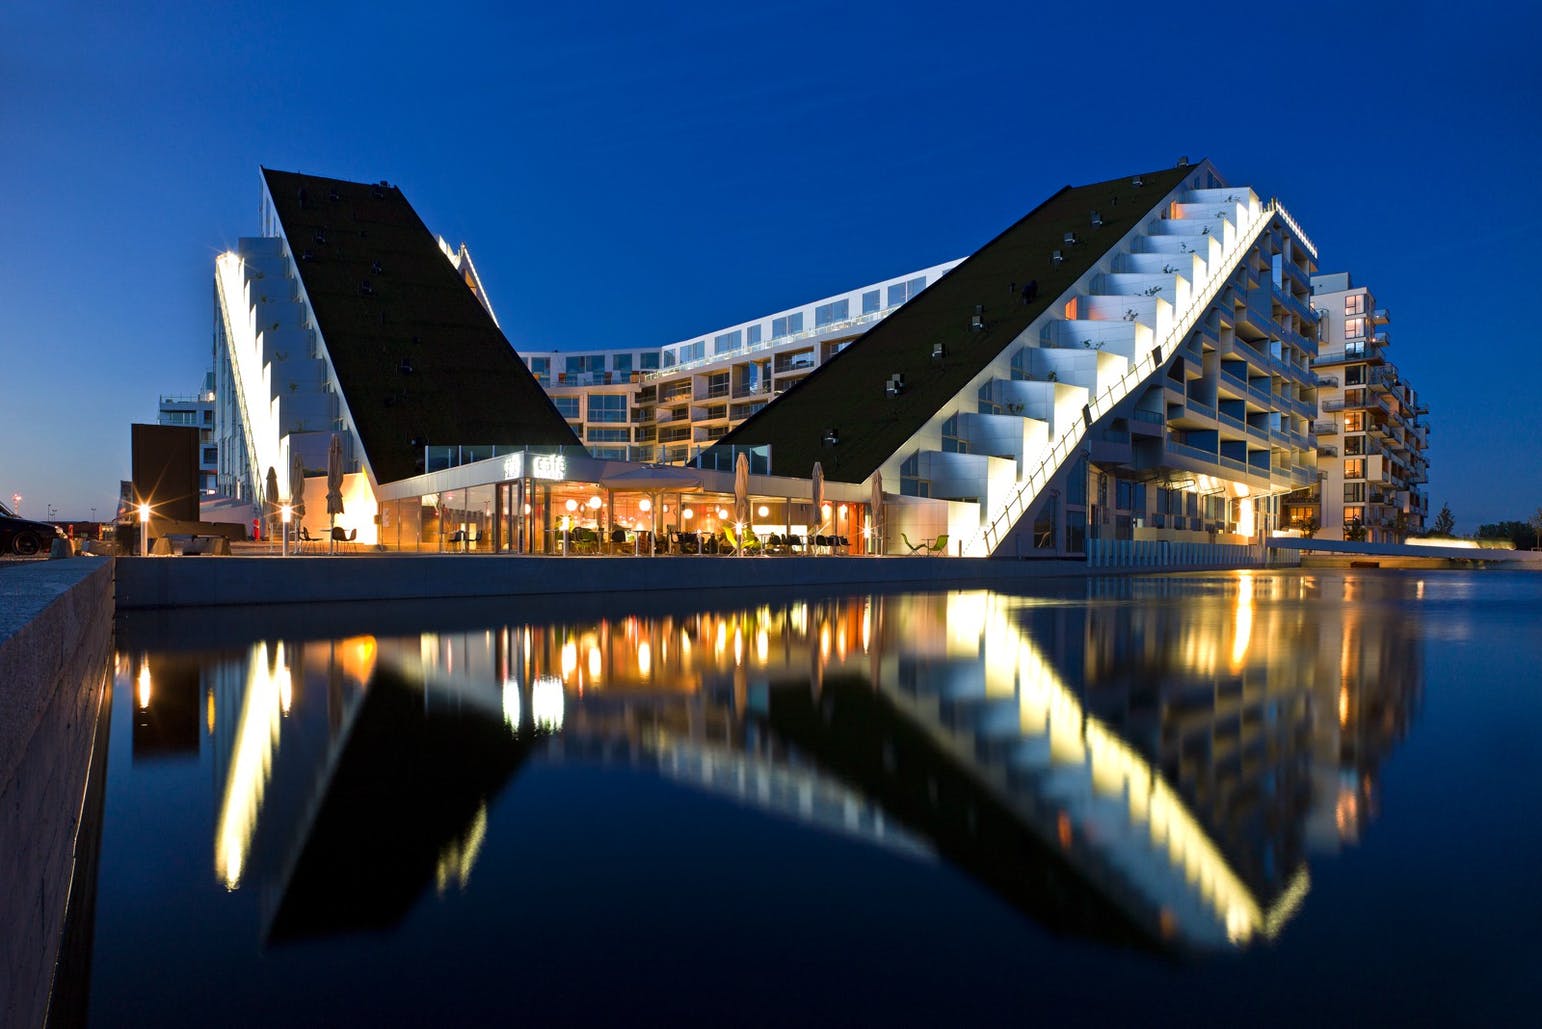 8 House, Copenhaga, Danemarca de BIG (Bjarke Ingels Group). Foto: Jens Lindhe.